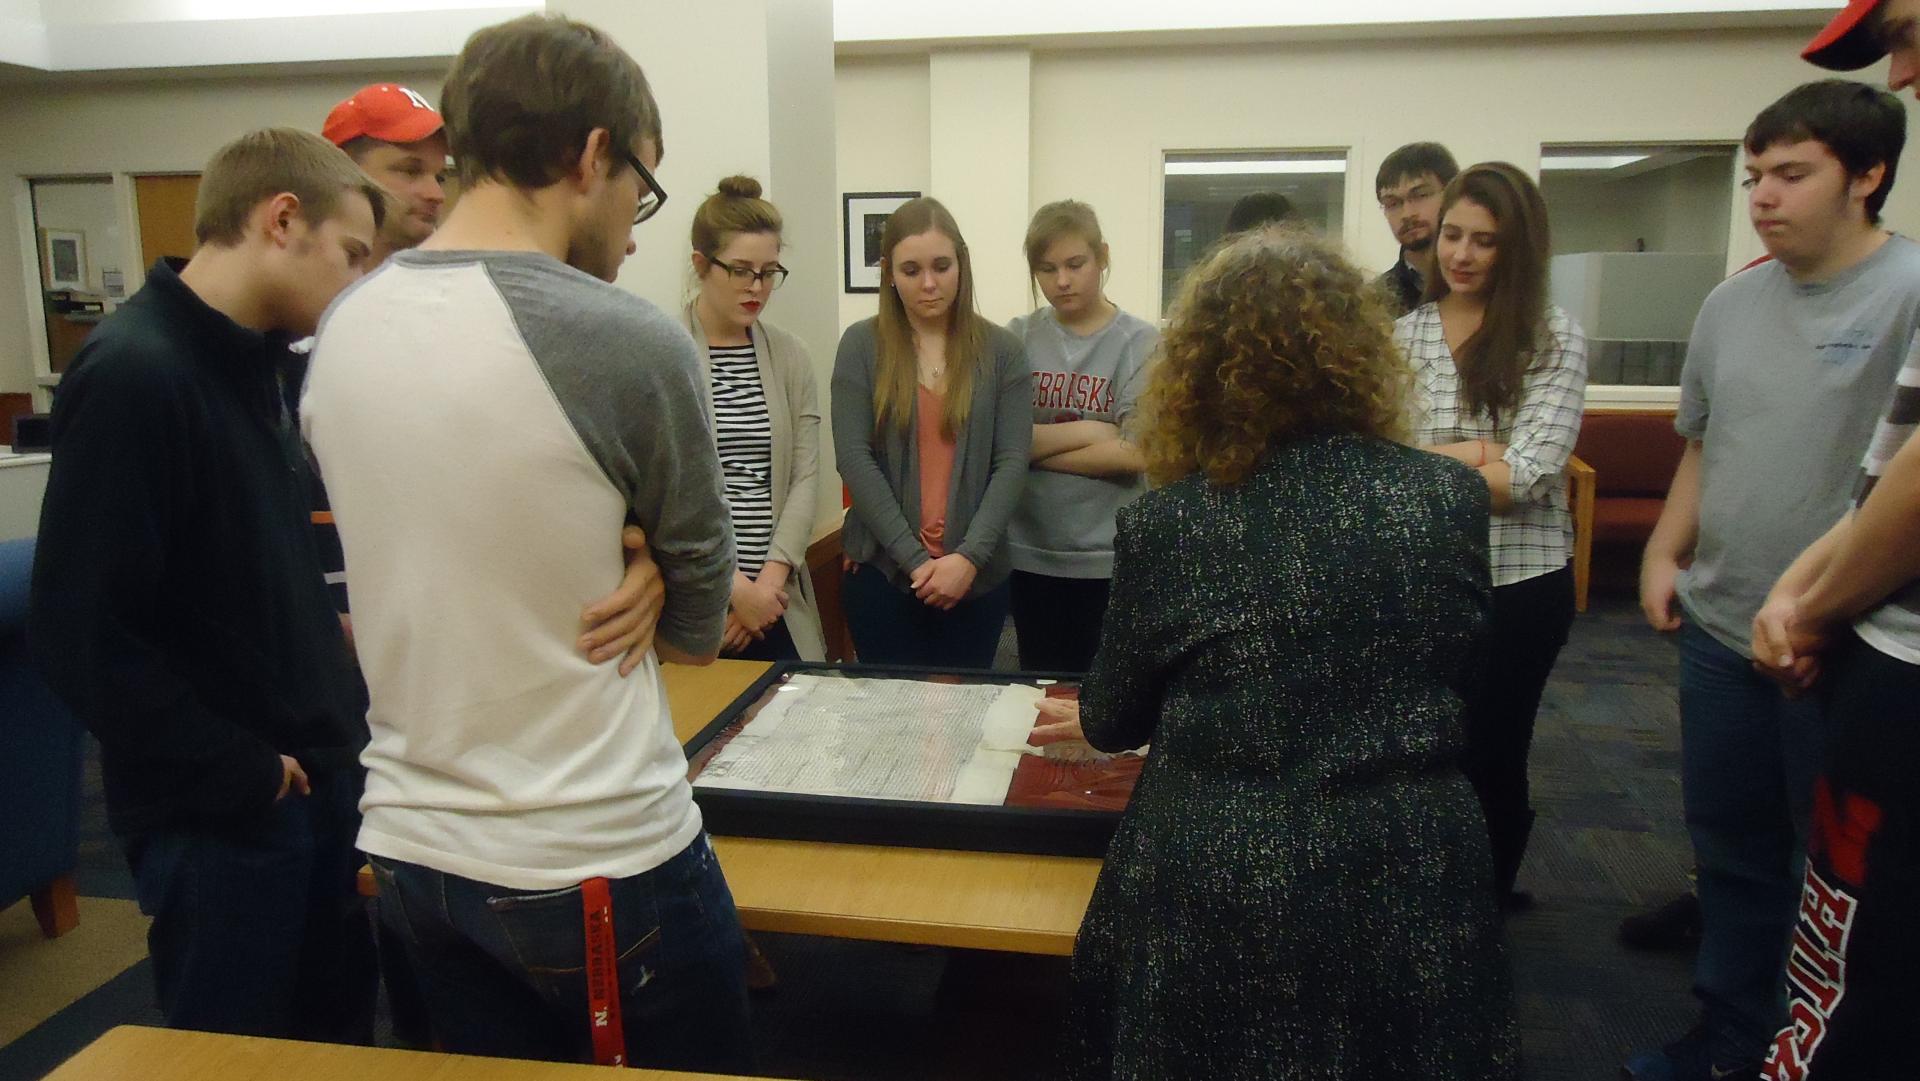 students view manuscript with Queen Elizabeth's seal